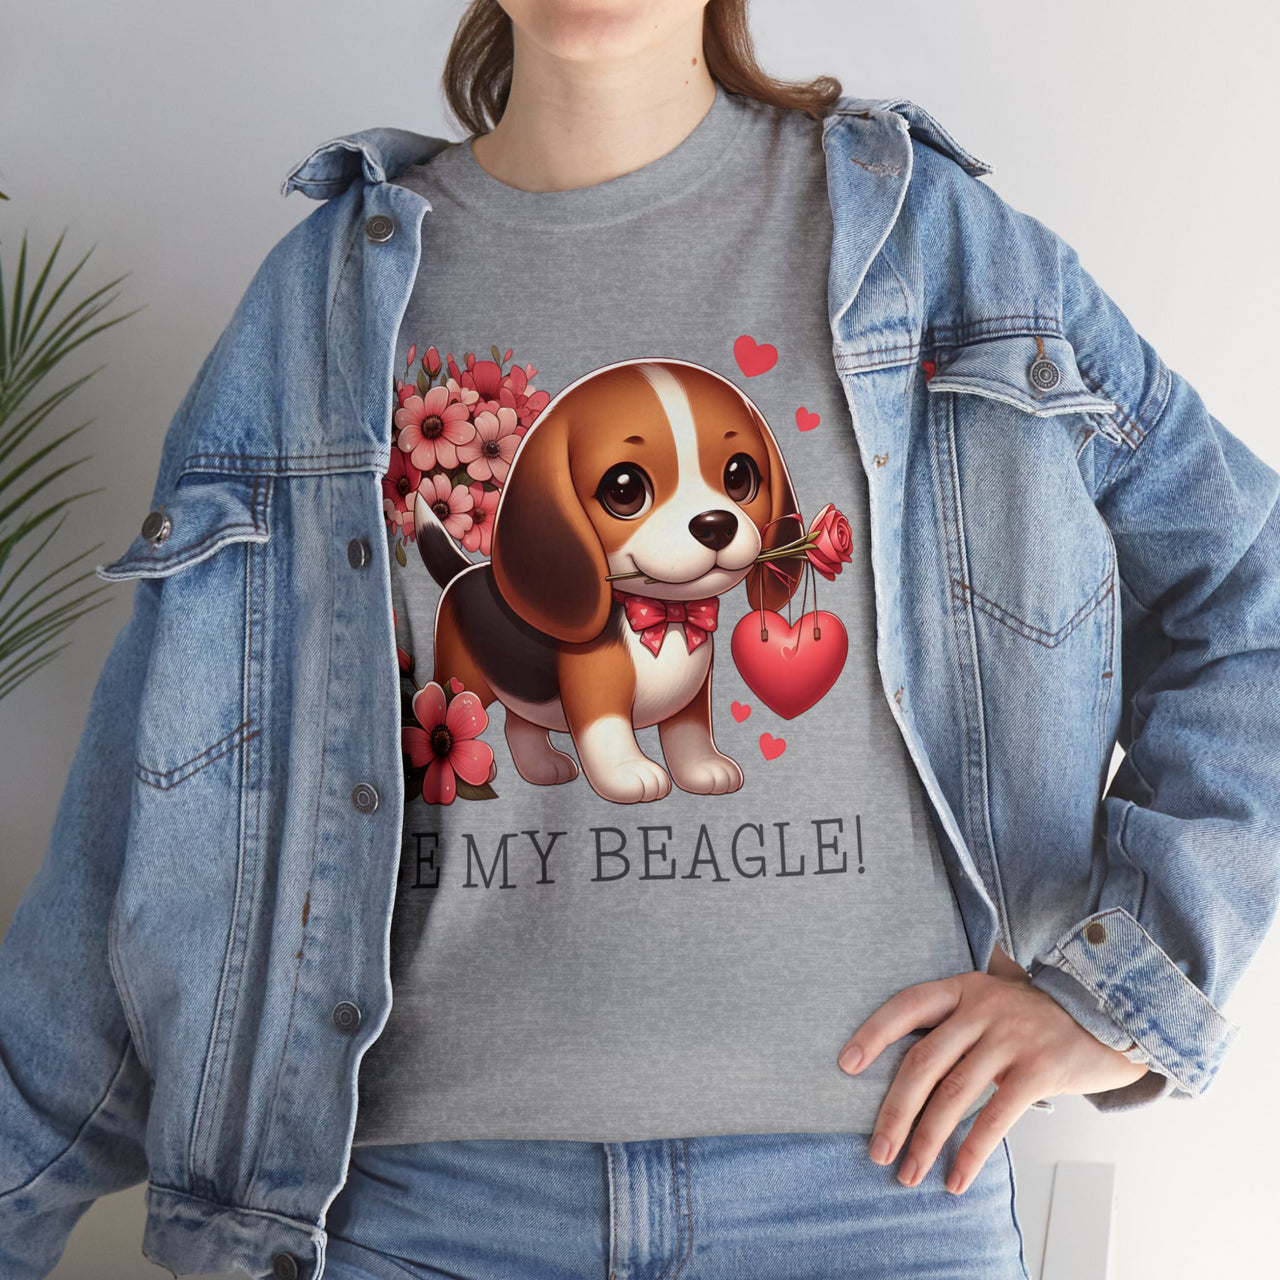 Be My Beagle! Unisex Tee